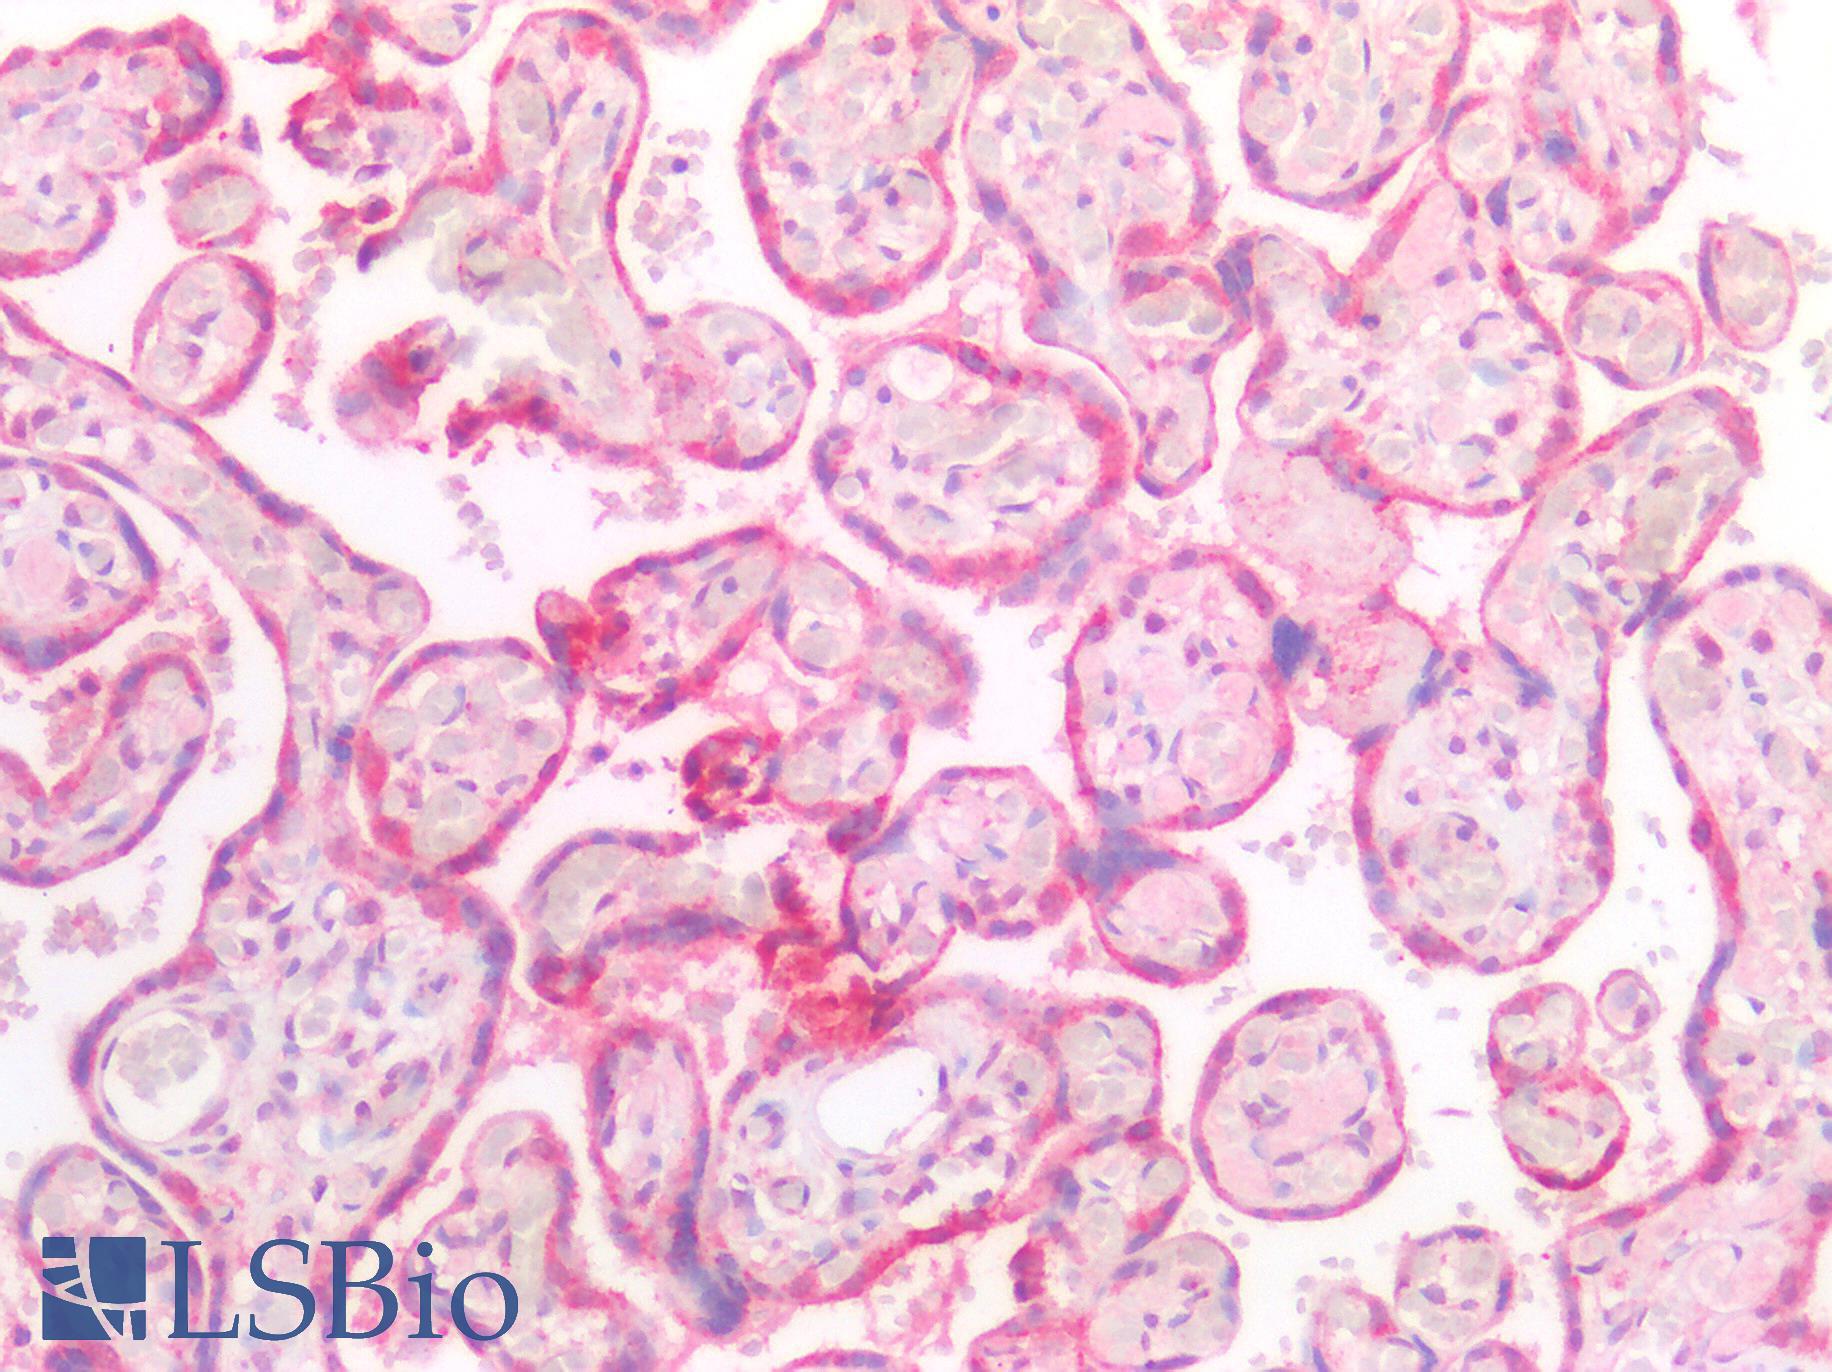 CTSK / Cathepsin K Antibody - Human Placenta: Formalin-Fixed, Paraffin-Embedded (FFPE)